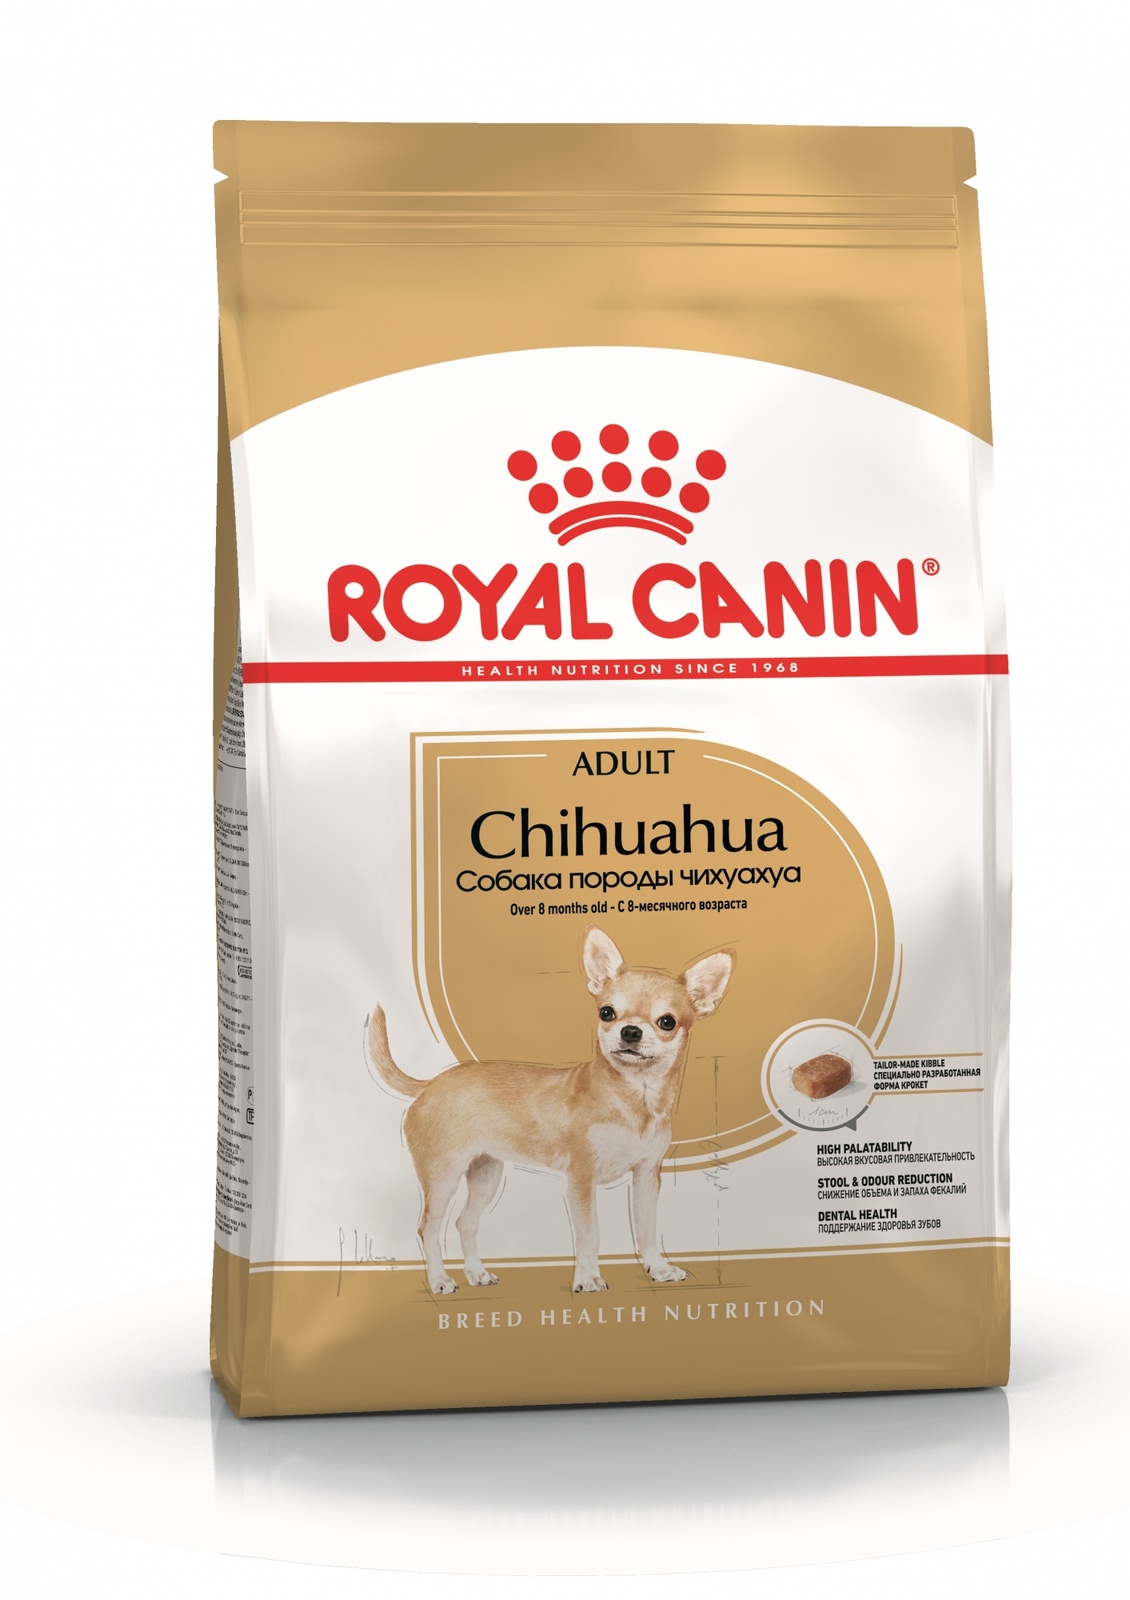 Для взрослого чихуахуа с 8 месяцев (3 кг) Royal Canin (сухие корма)